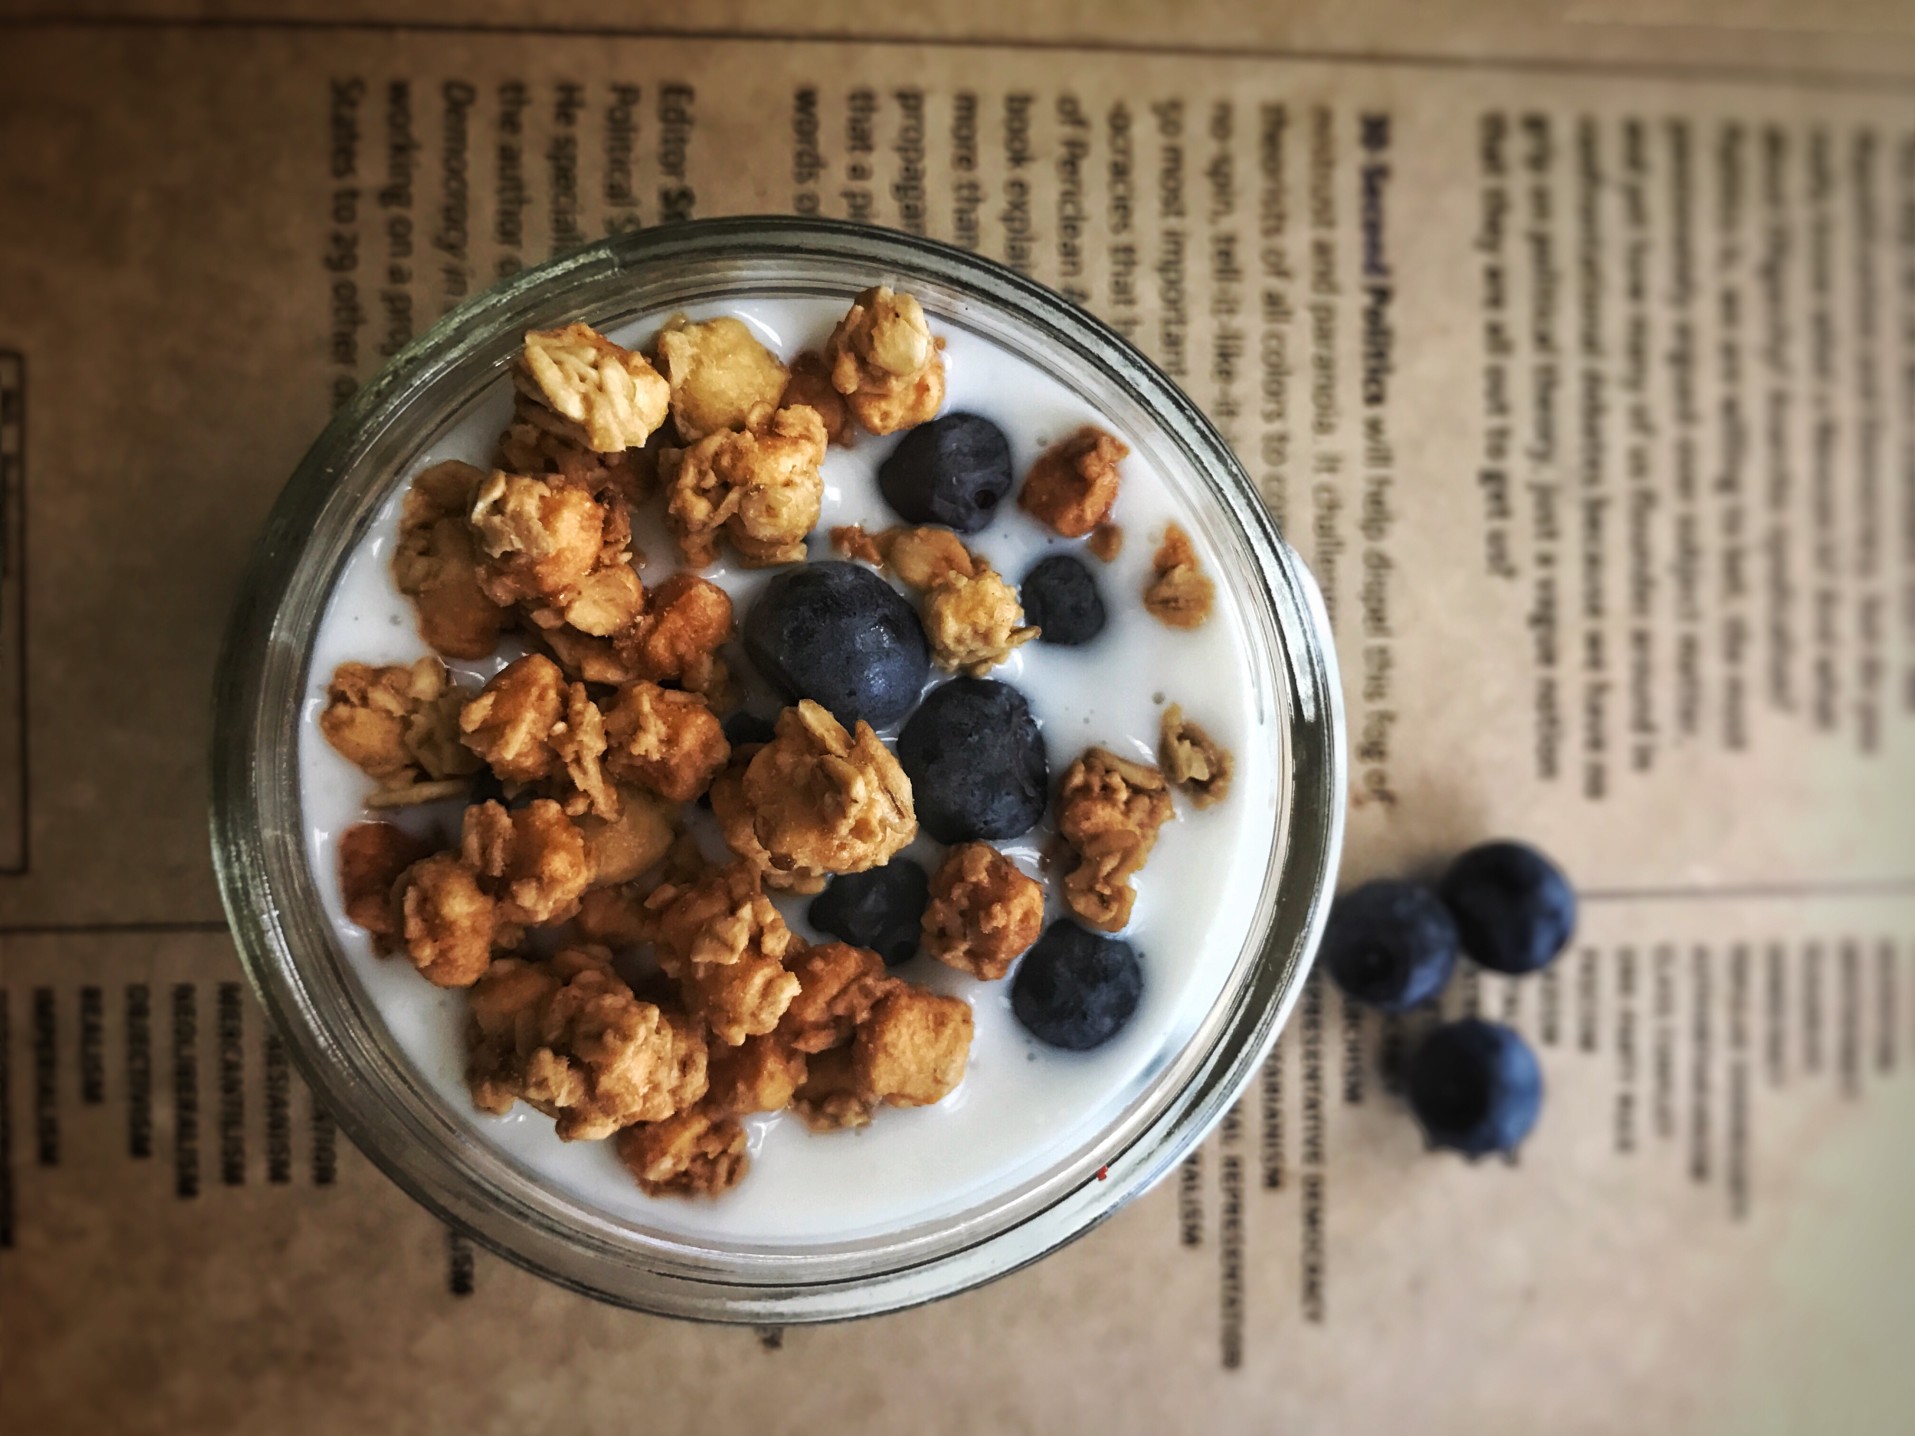 yogurt parfait with granola and blueberries